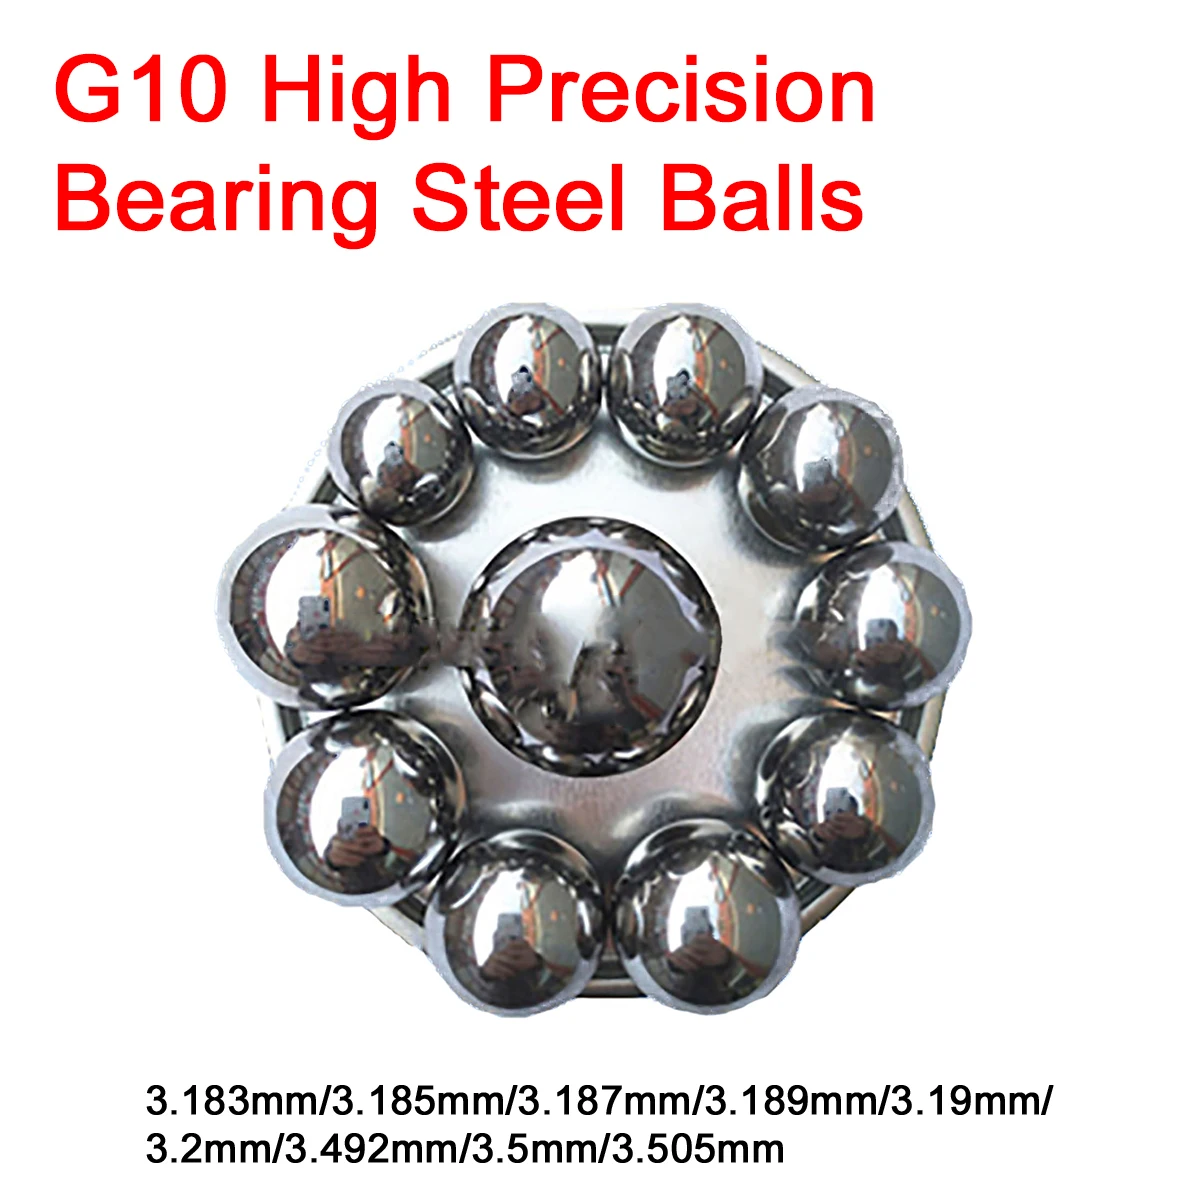 

100/500/1000Pcs G10 High Precision Bearing Steel Balls 3.183/3.185/3.187/3.189/3.19/3.2/3.492/3.5/3.505mm Chrome Bearing Steel